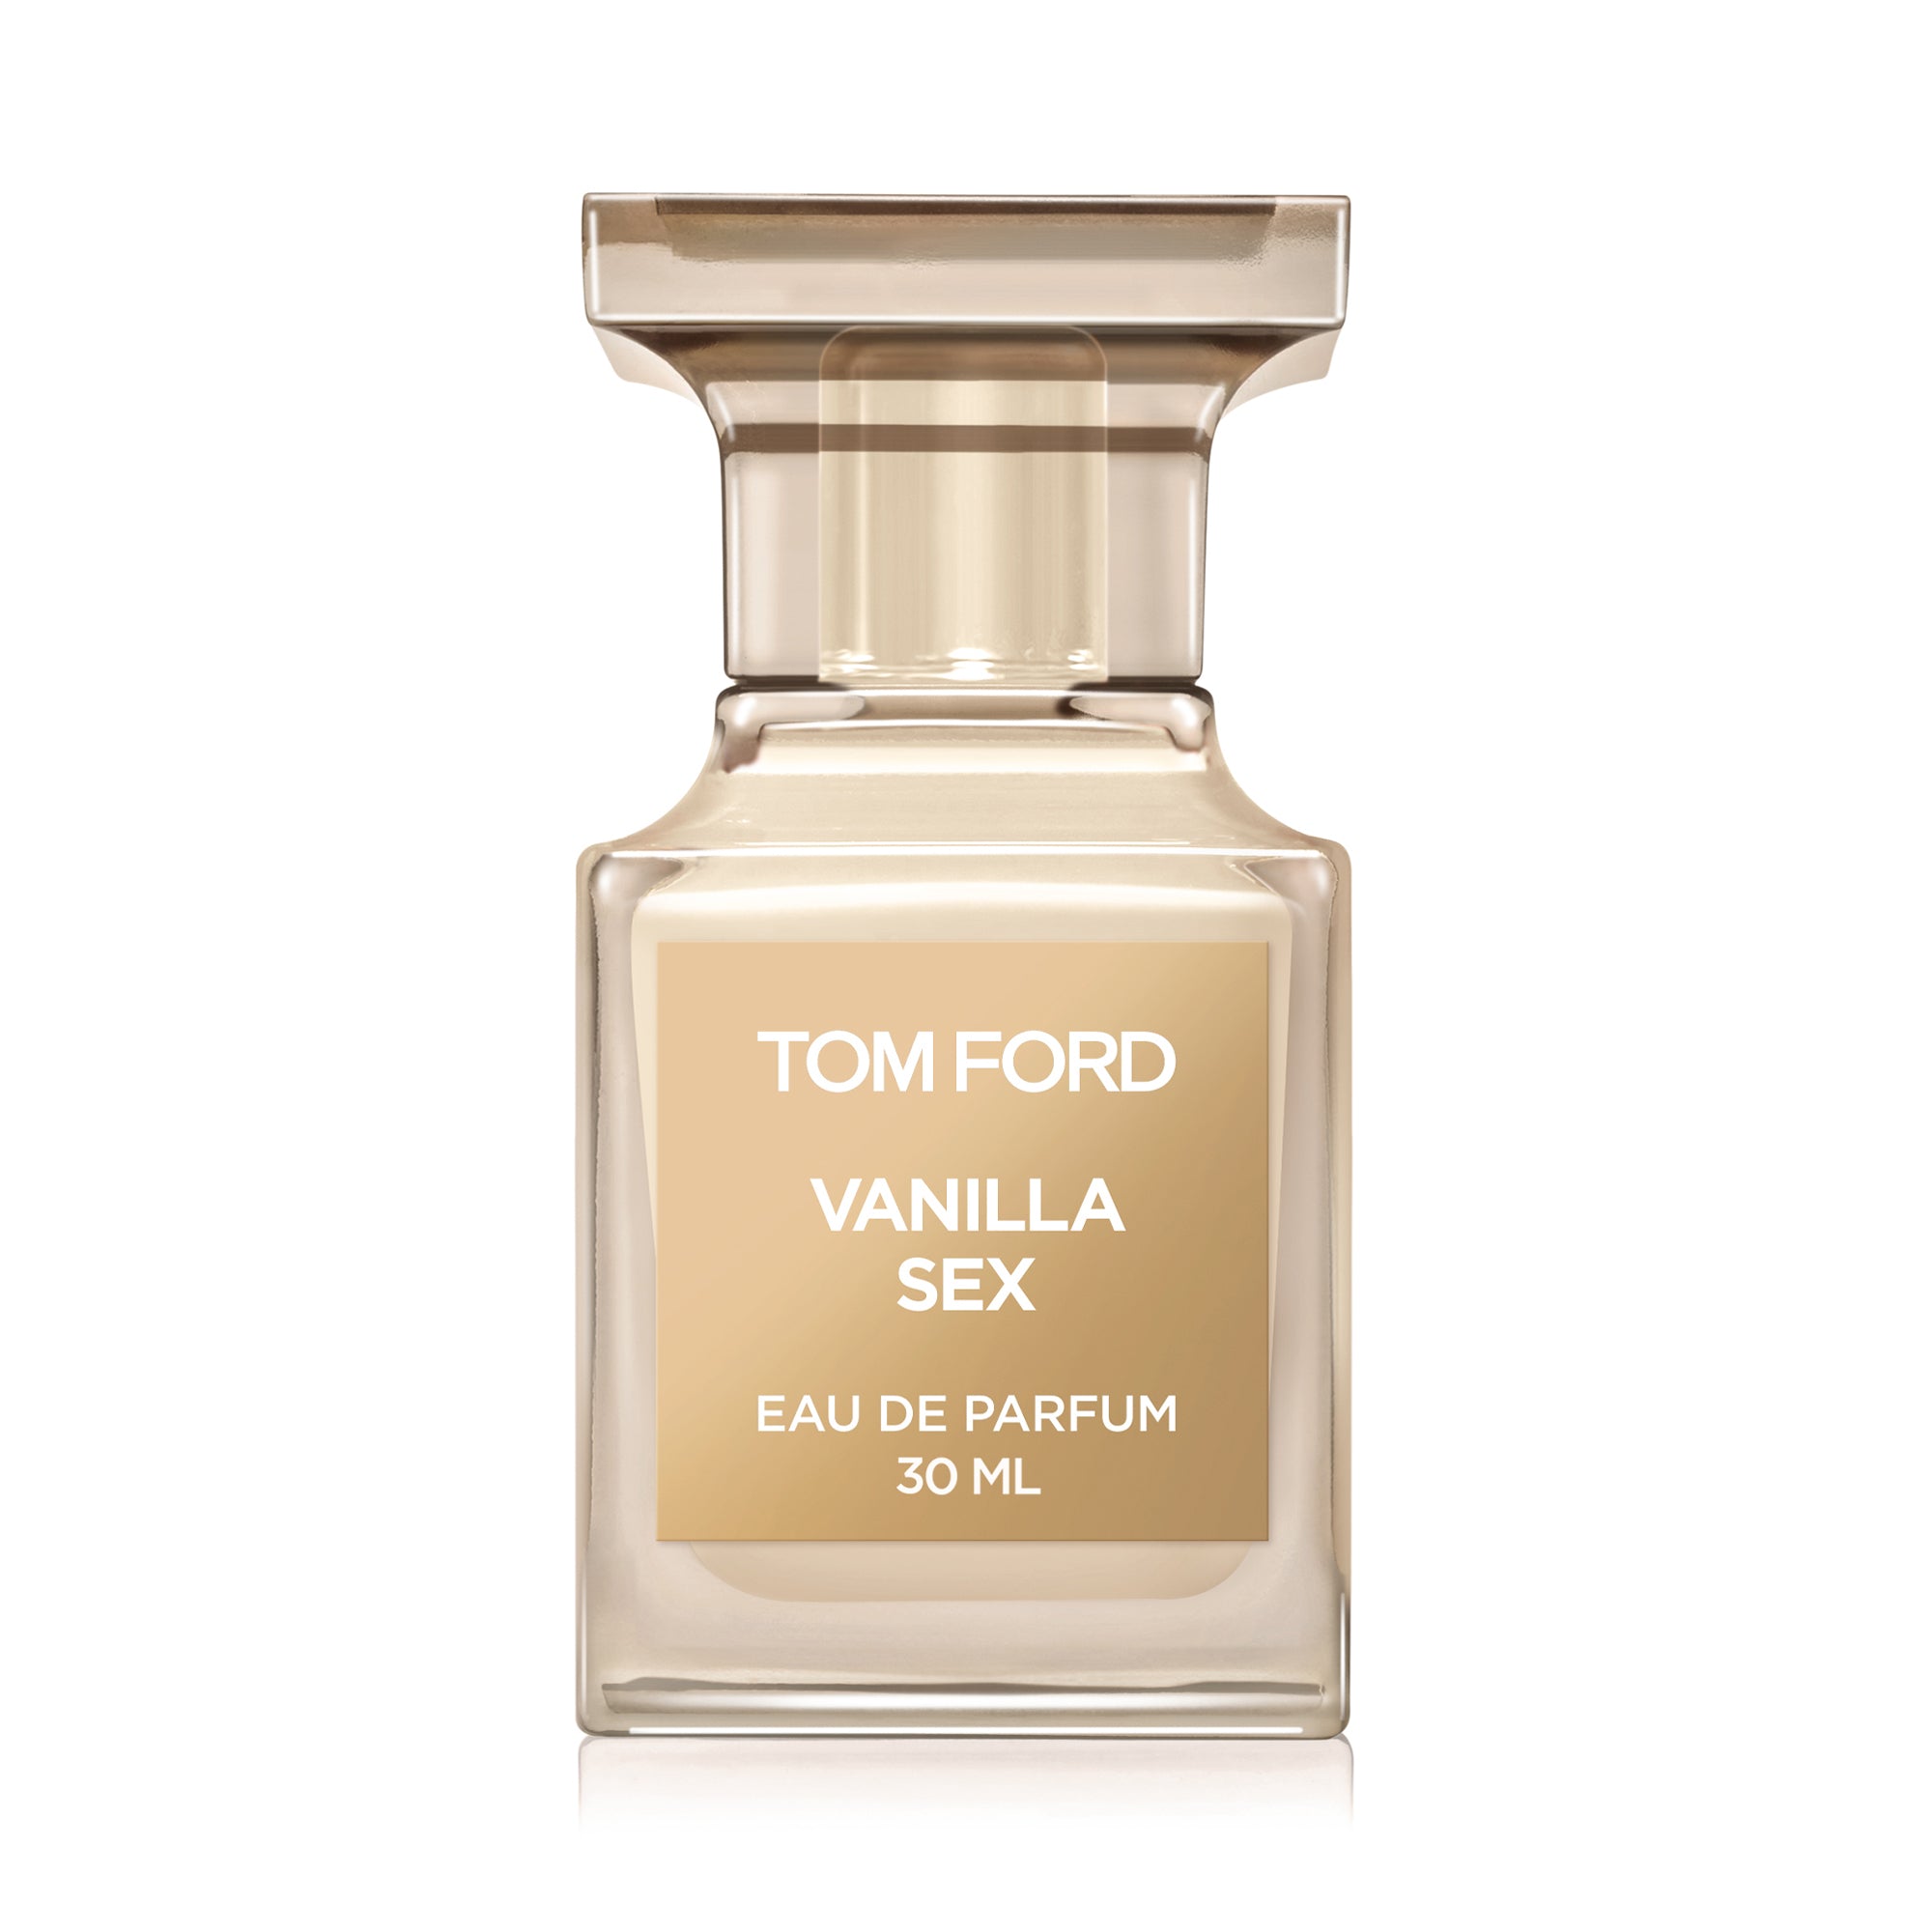 Tom Ford Vanilla Sex 30ml Eau de Parfum